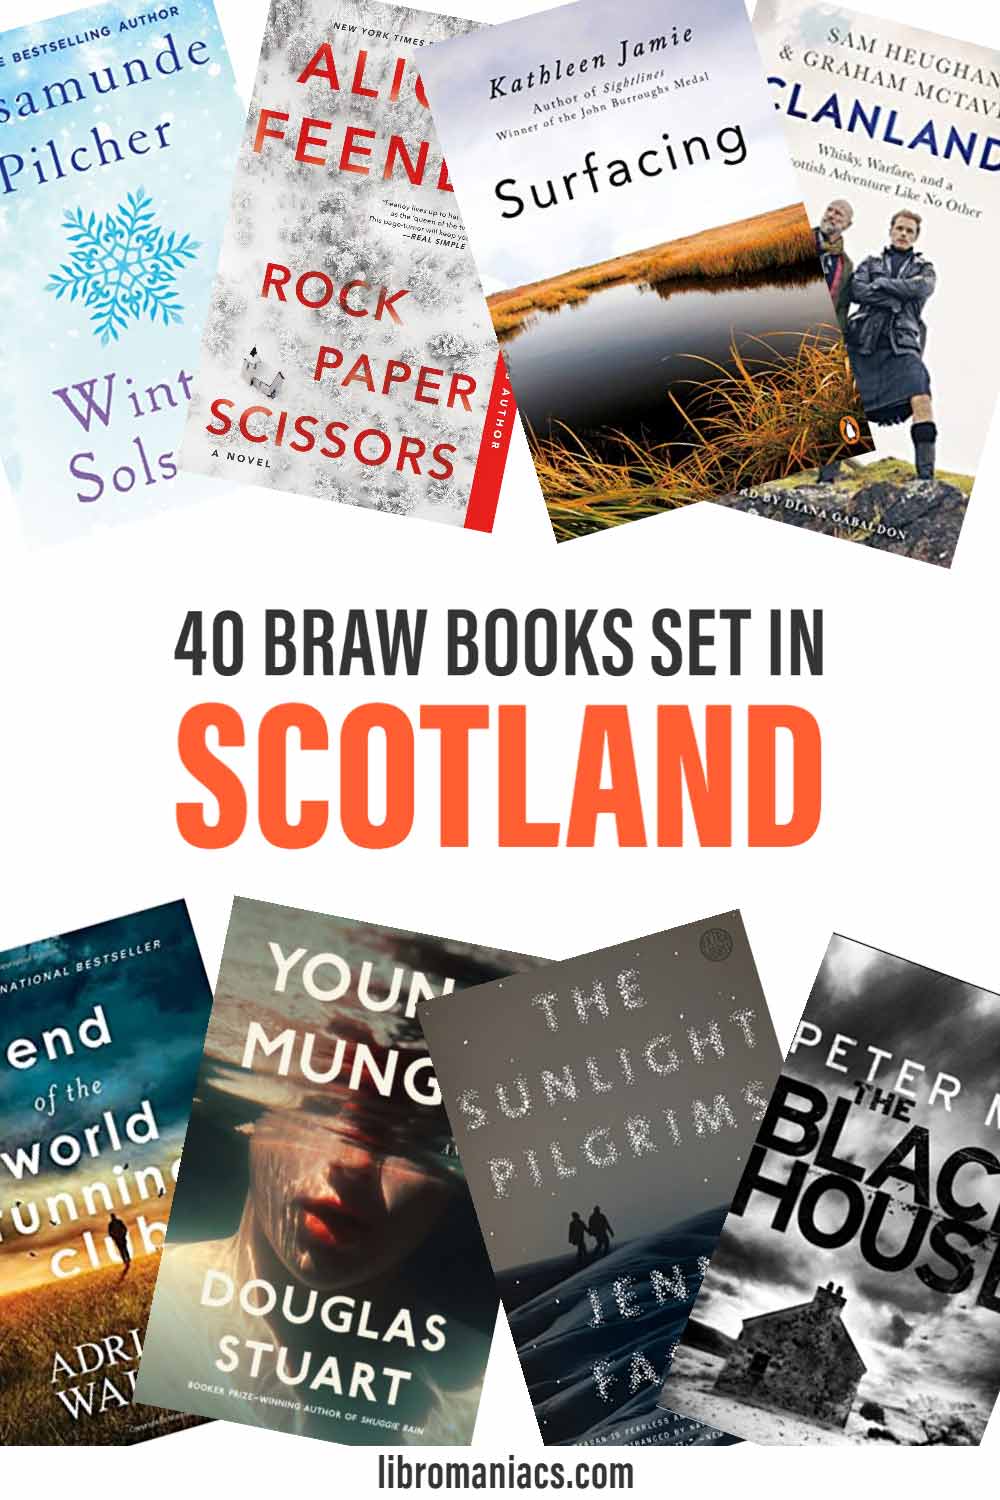 40 Braw books set in Scotland